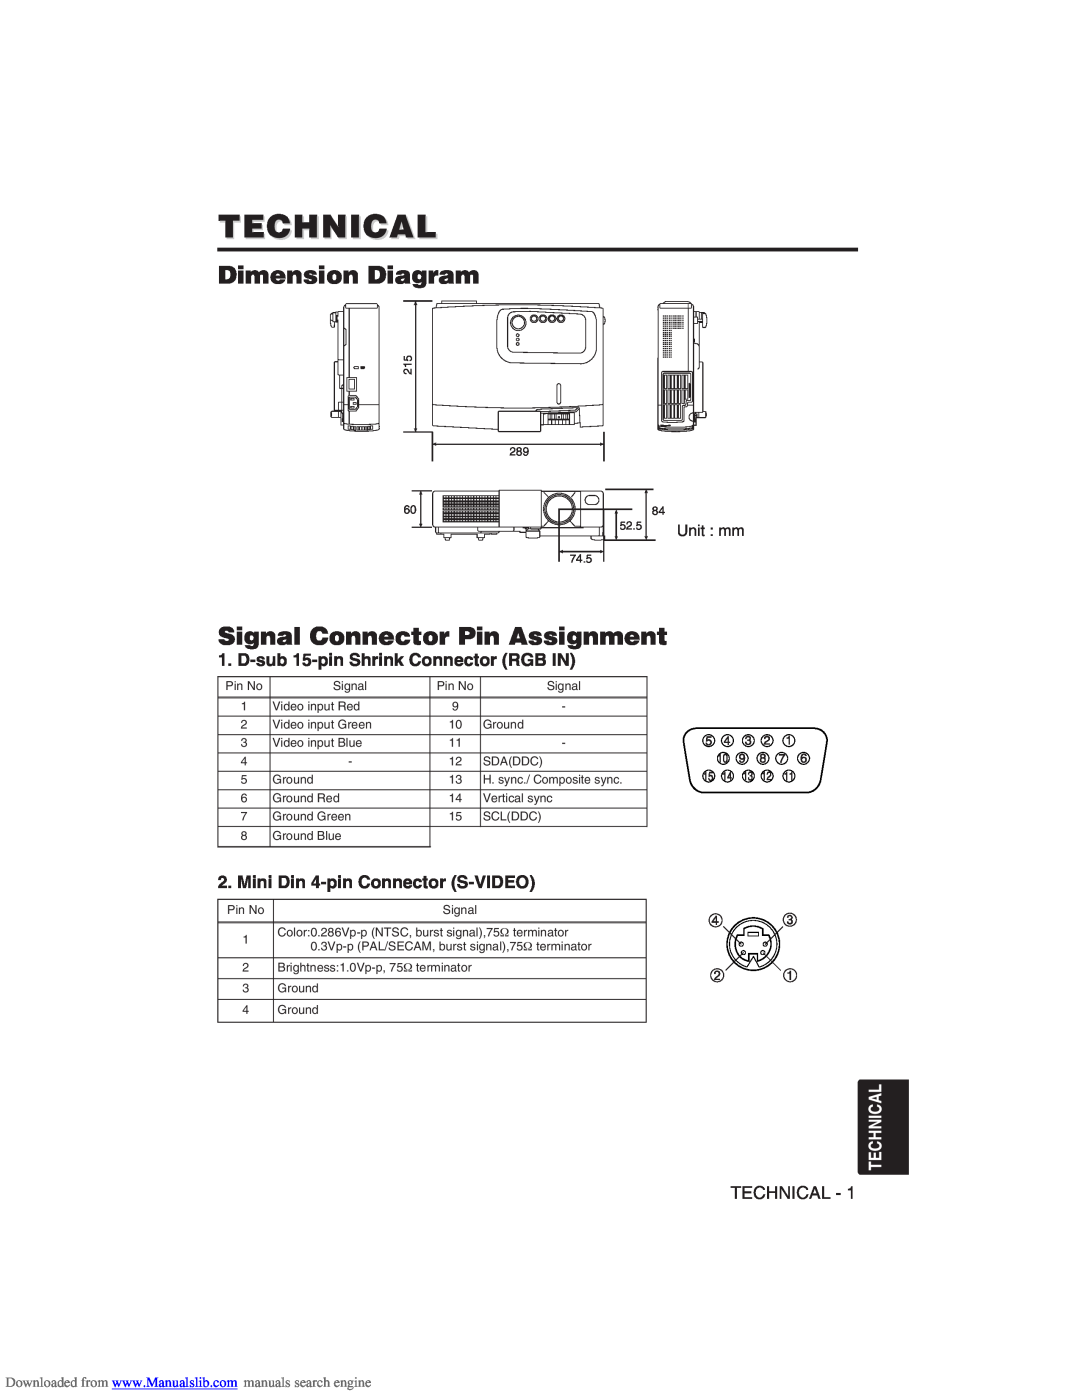 Hitachi CP-X275W Technical, Dimension Diagram, Signal Connector Pin Assignment, D-sub 15-pinShrink Connector RGB IN 